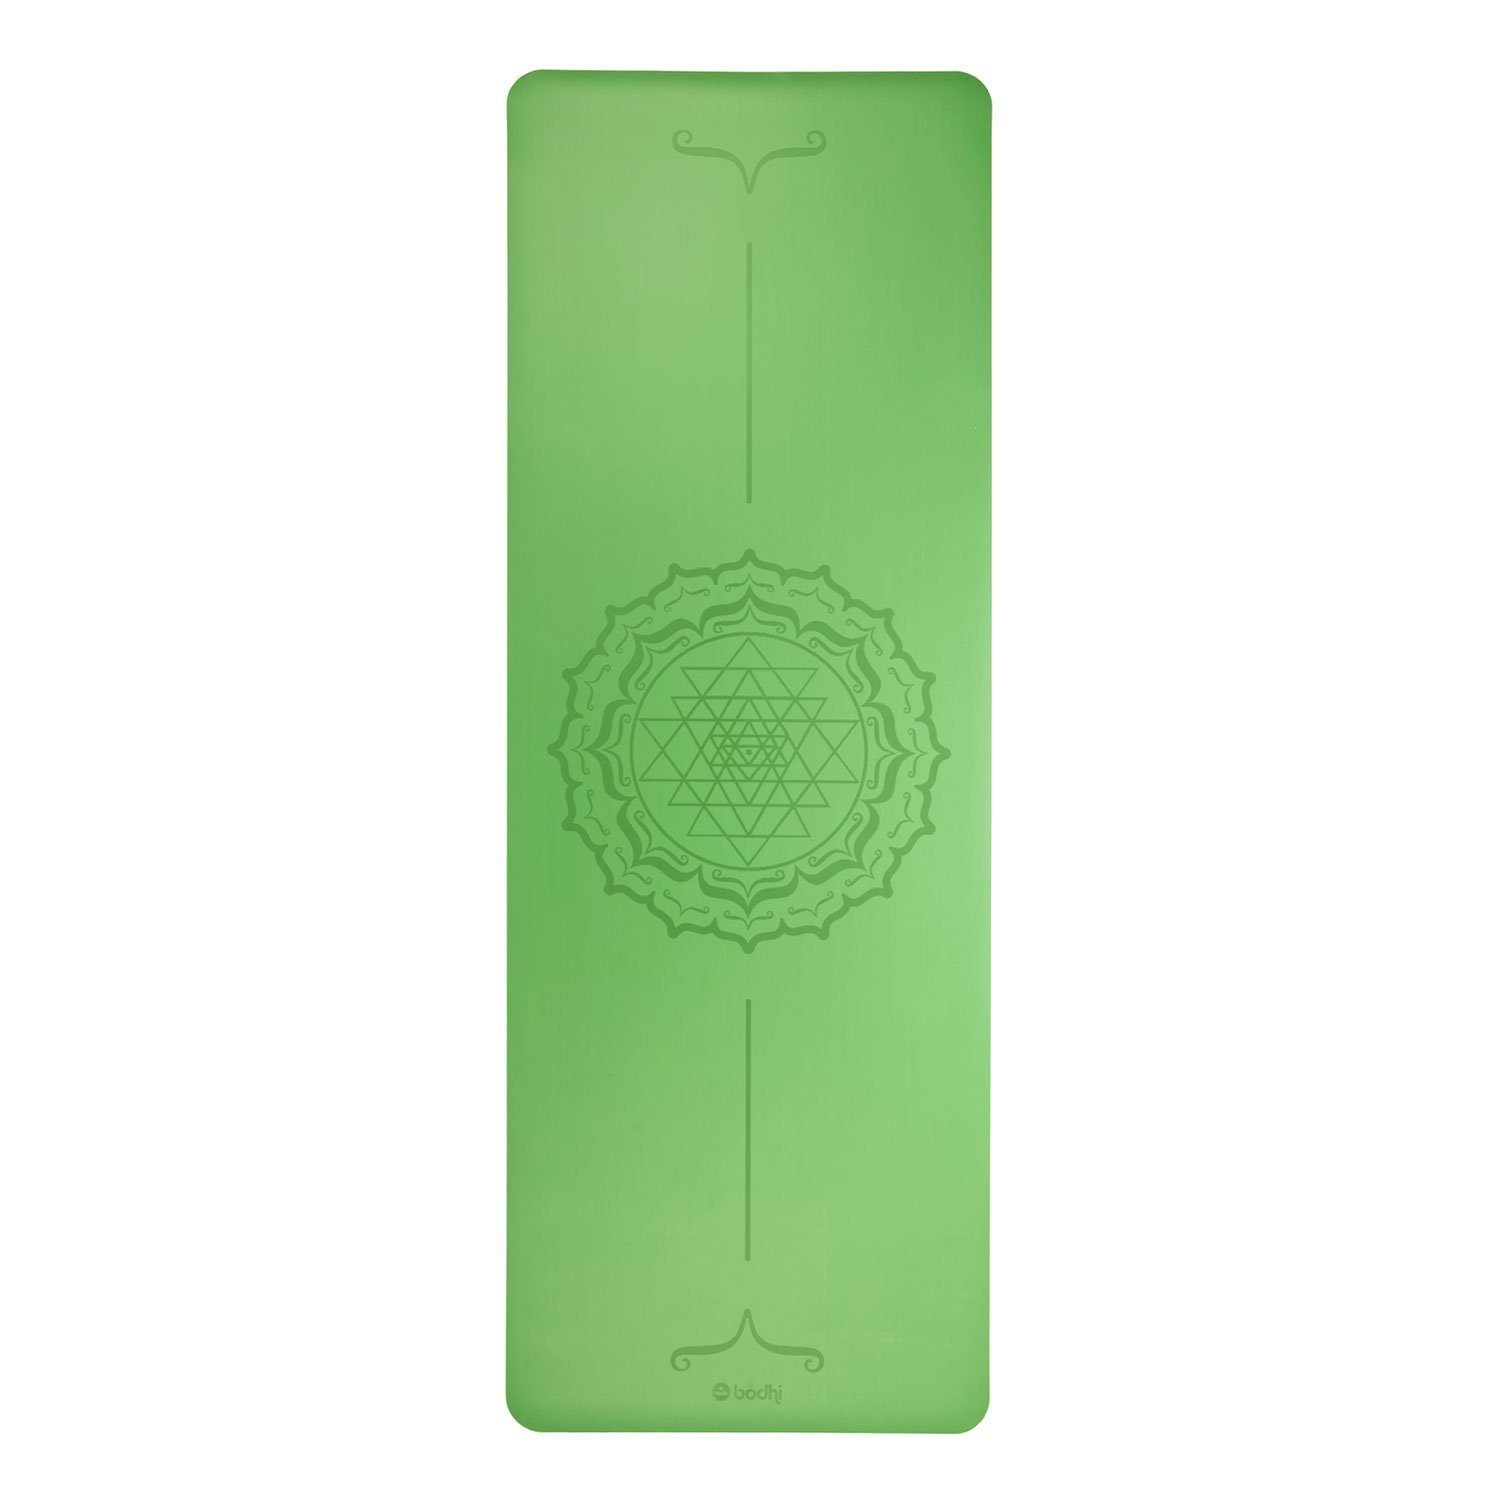 bodhi Yogamatte Design Yogamatte PHOENIX Mat, grün mit Yantra-Mandala